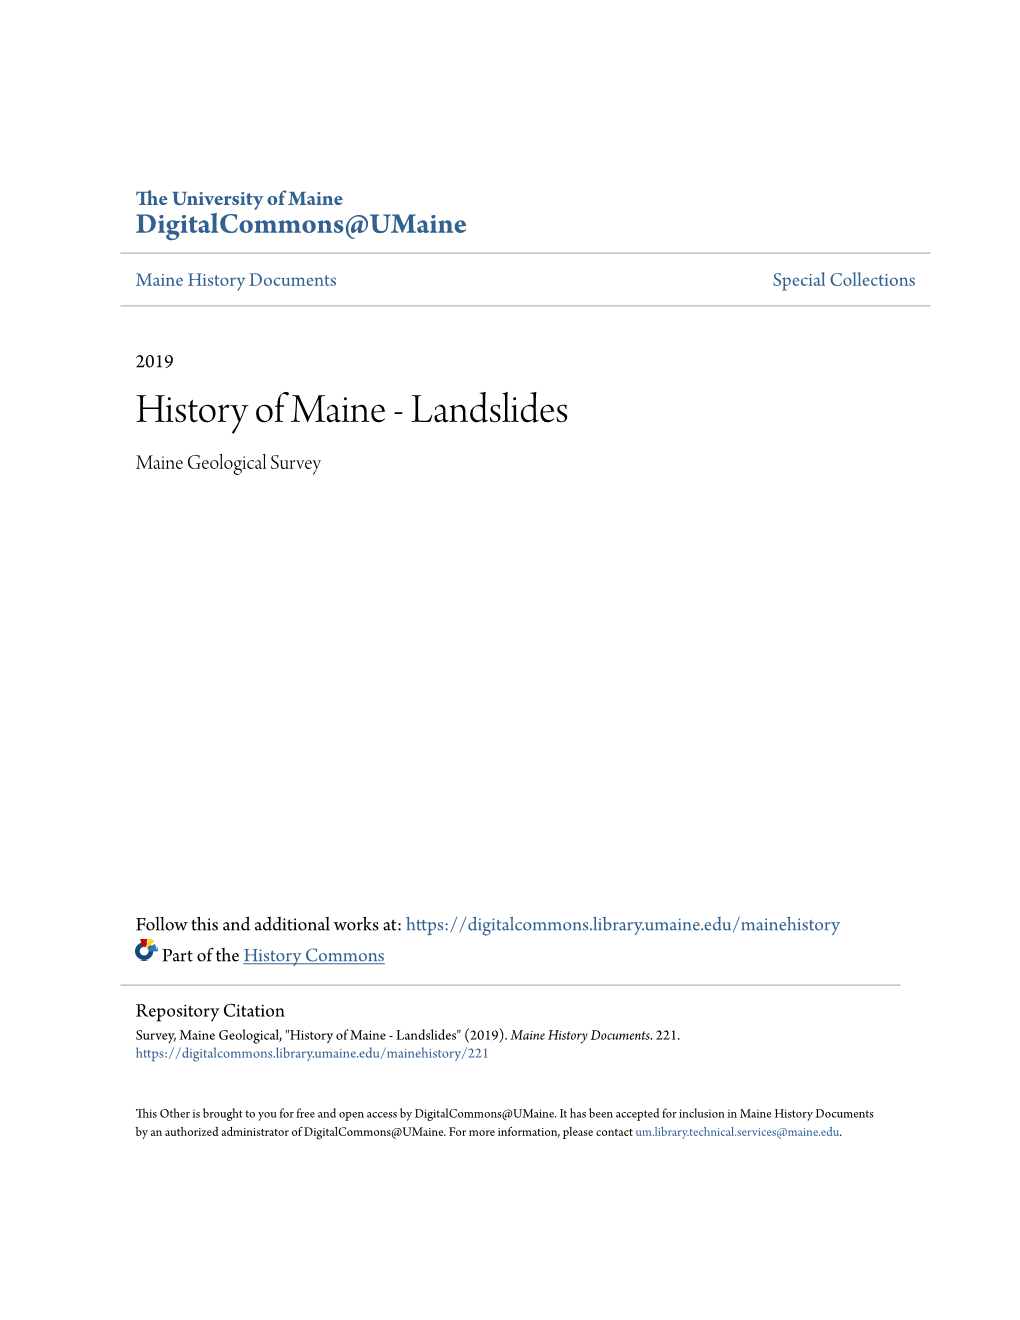 History of Maine - Landslides Maine Geological Survey